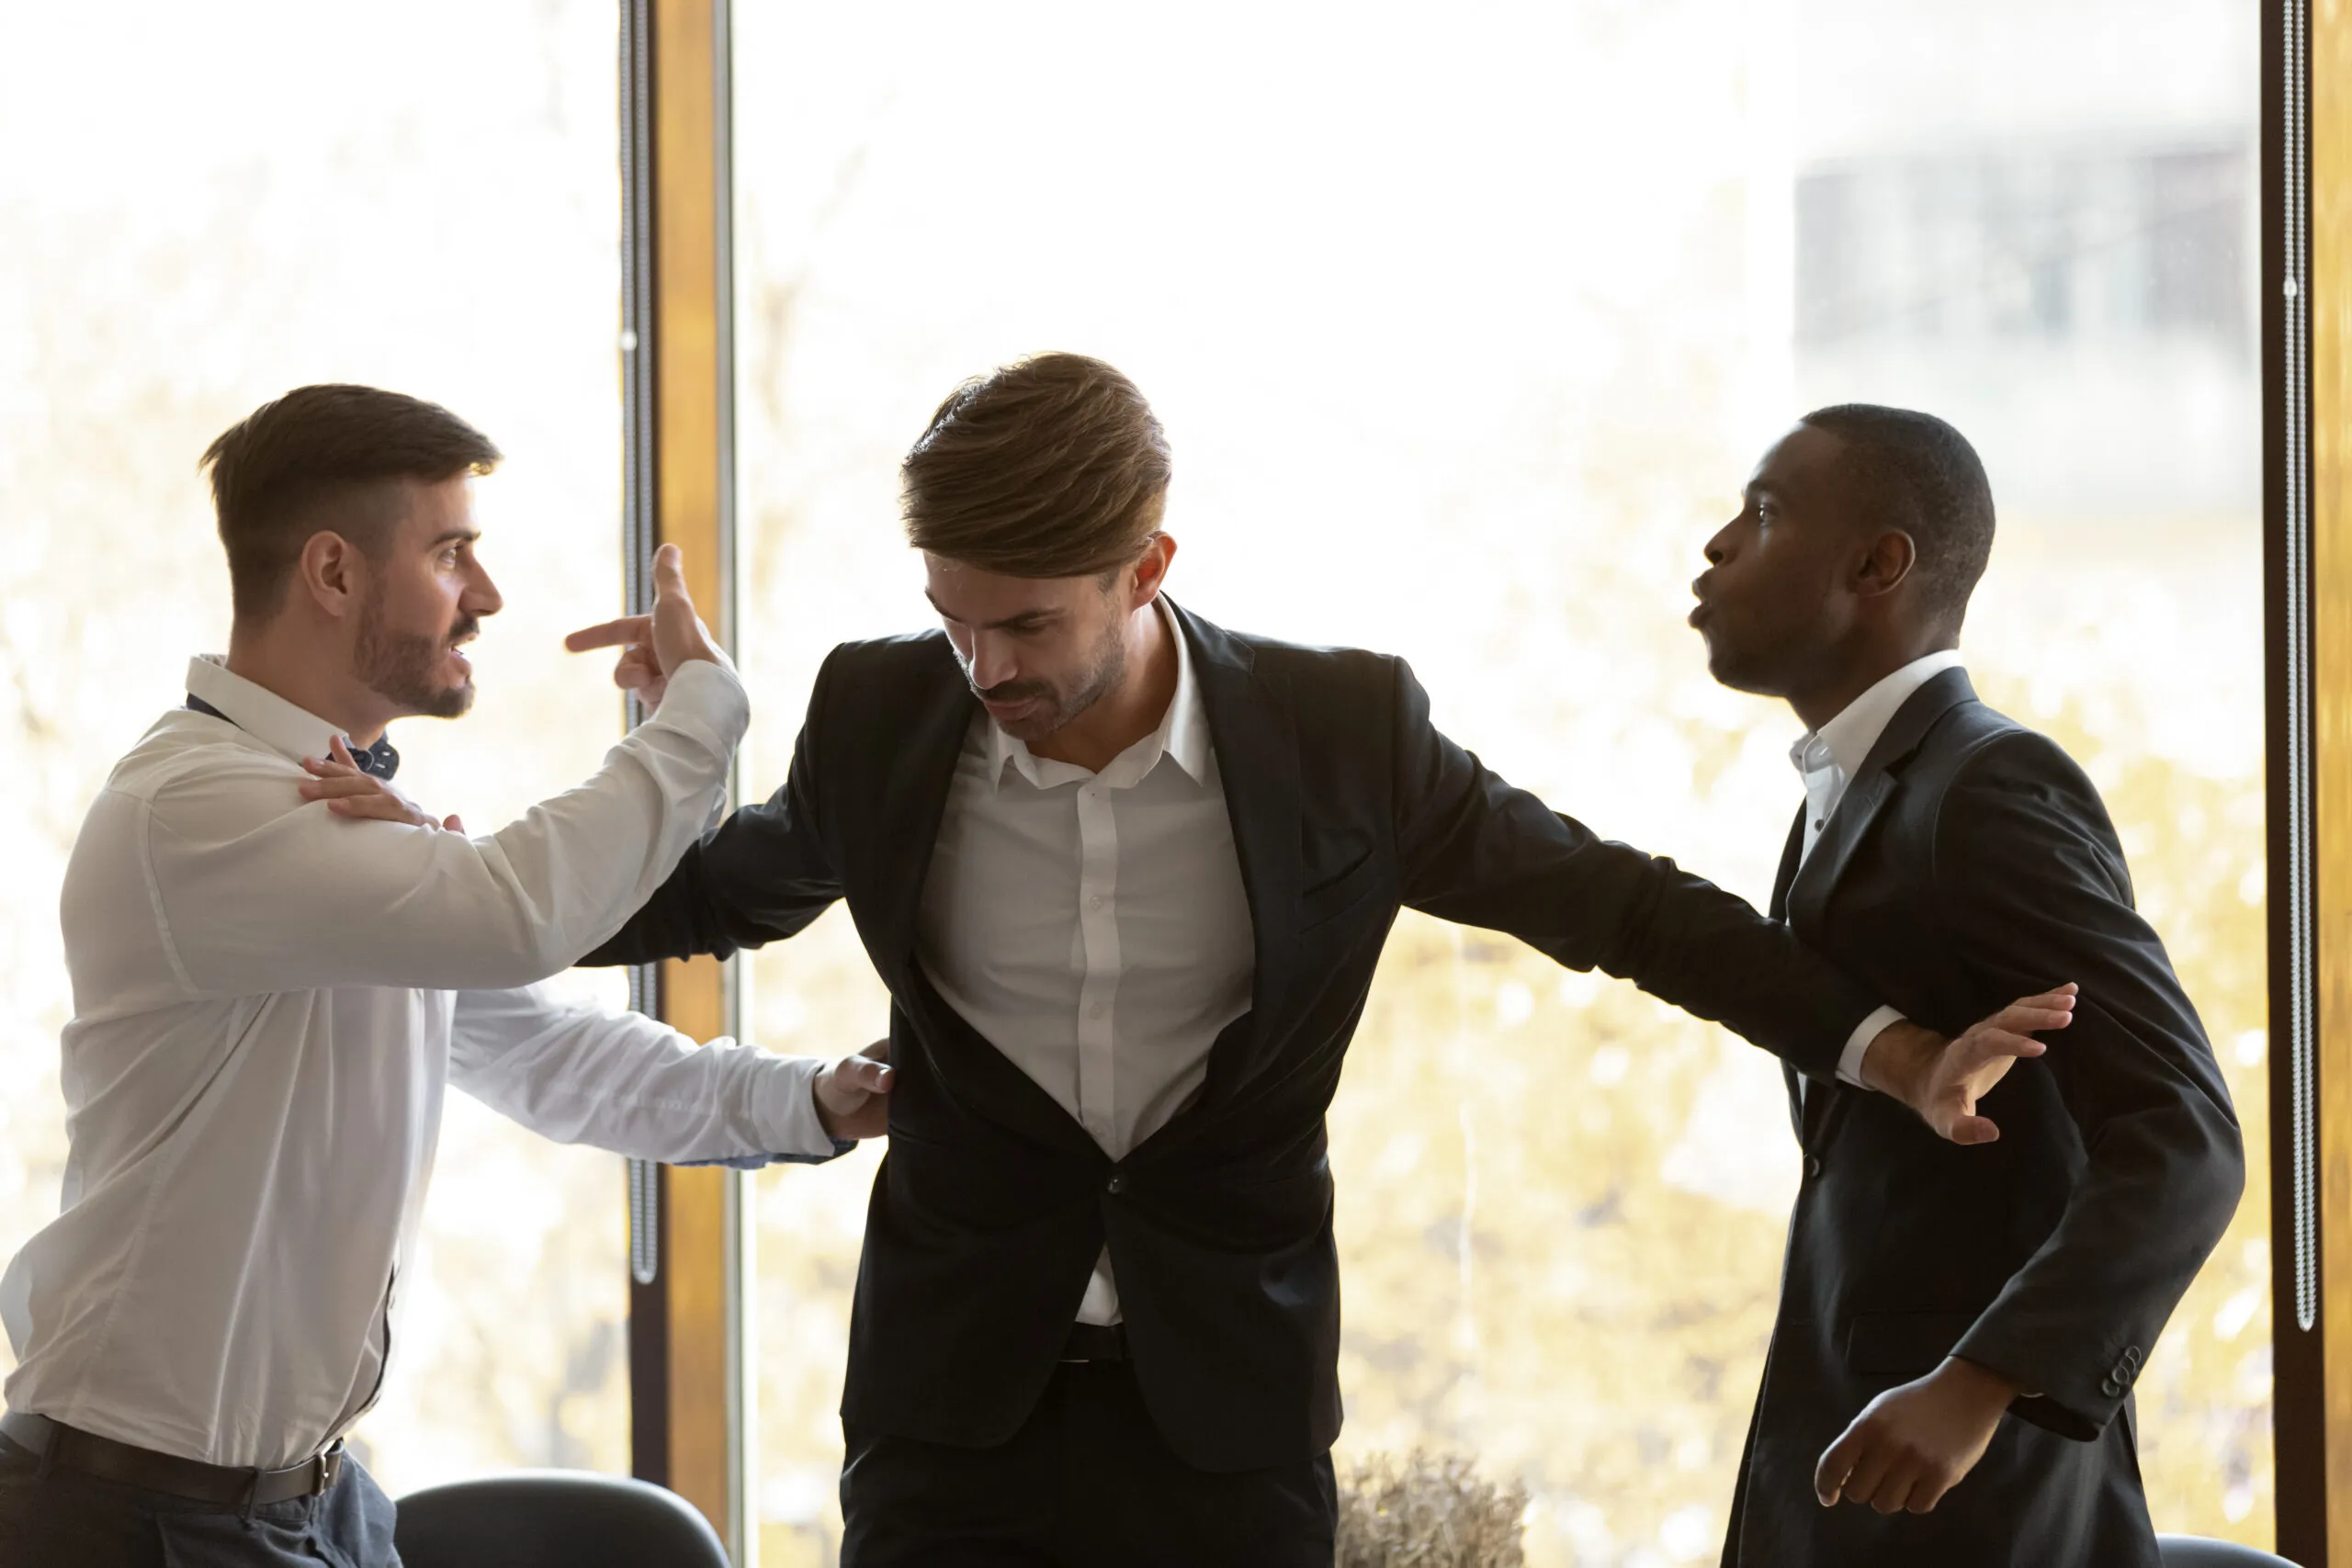 Male,colleague,set,apart,angry,diverse,business,men,coworkers,argue